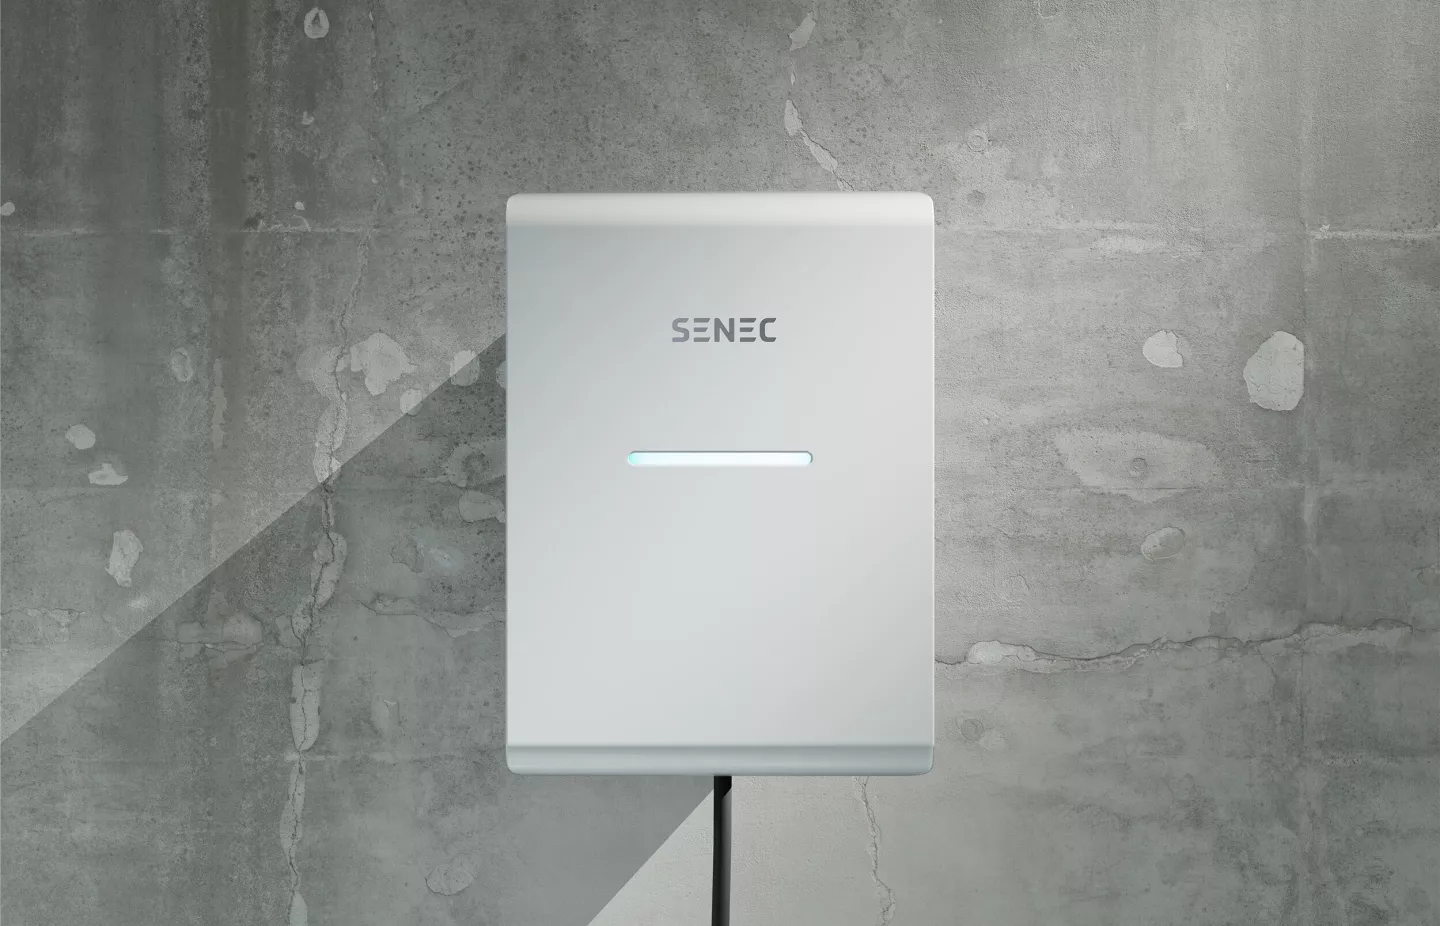 SENEC.Wallbox pro s on concrete wall